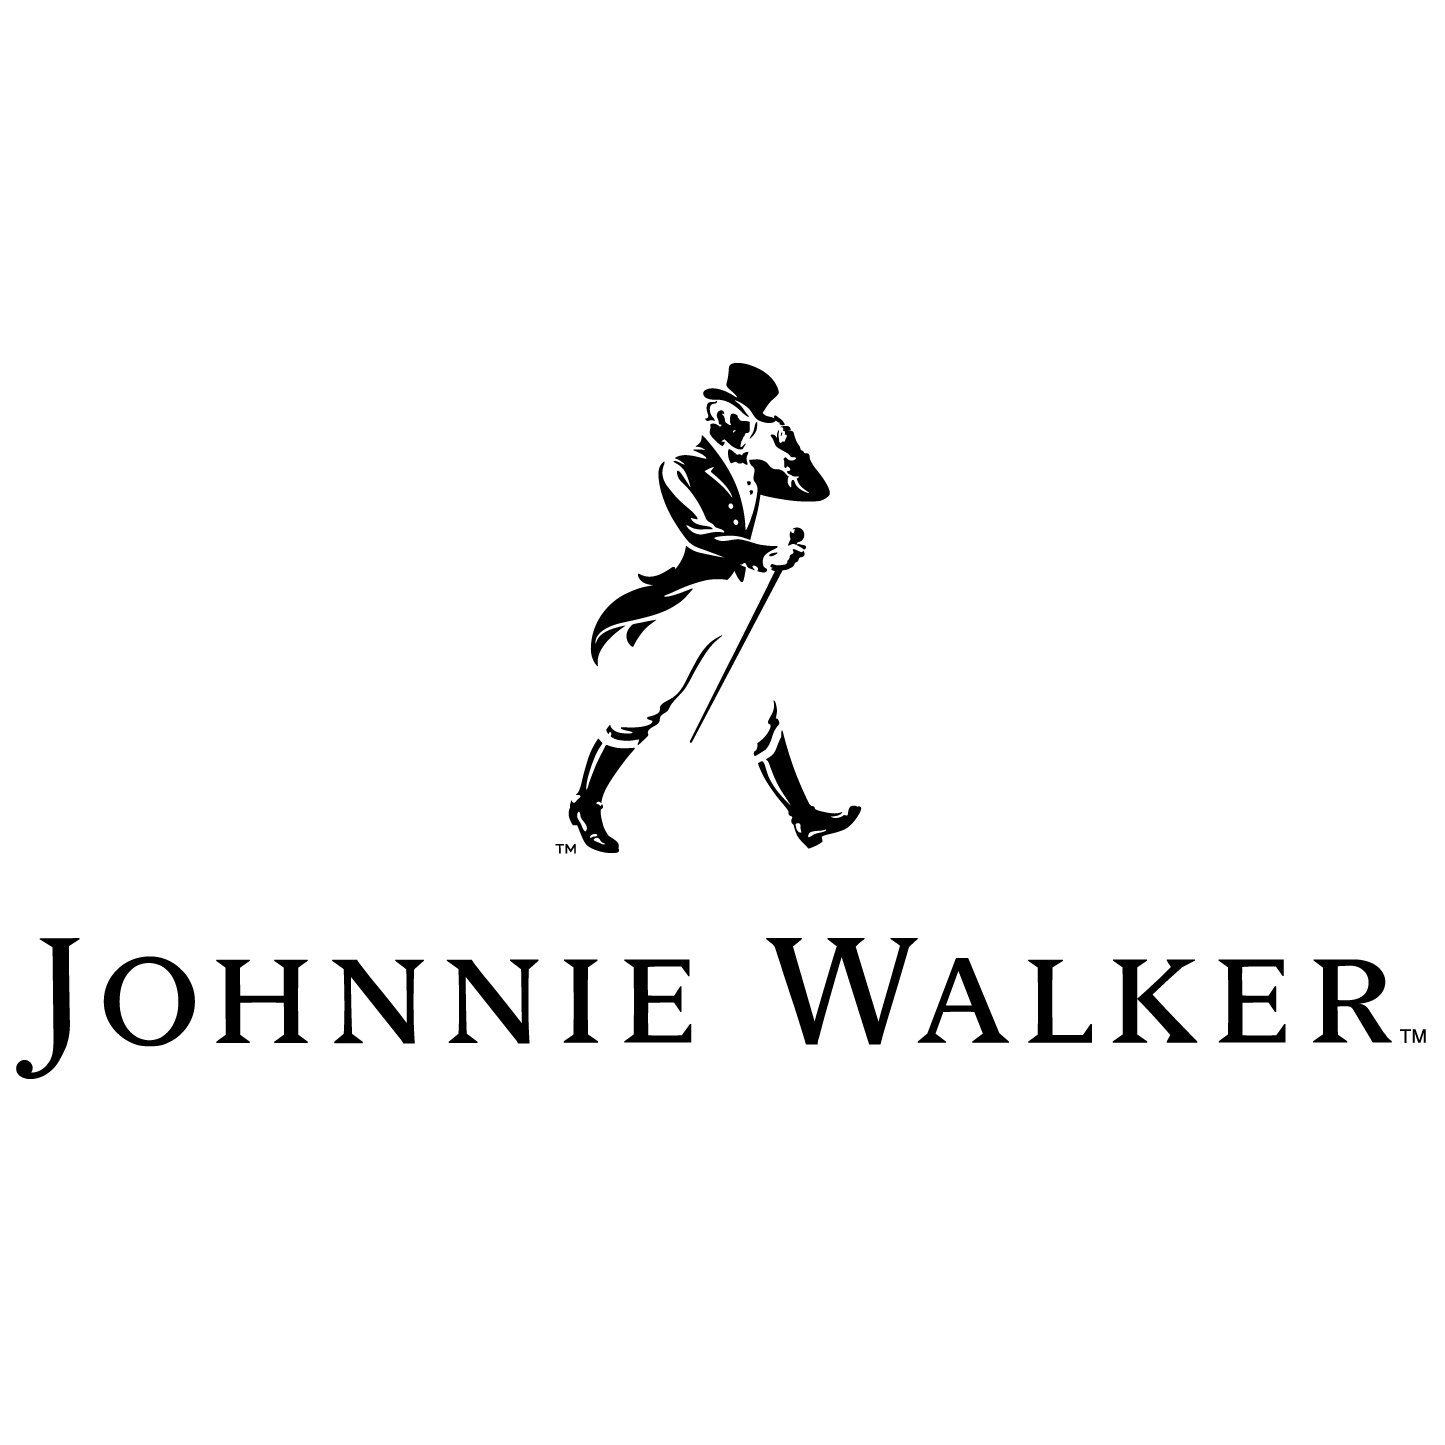 Johnnie Walker BW copy.jpg